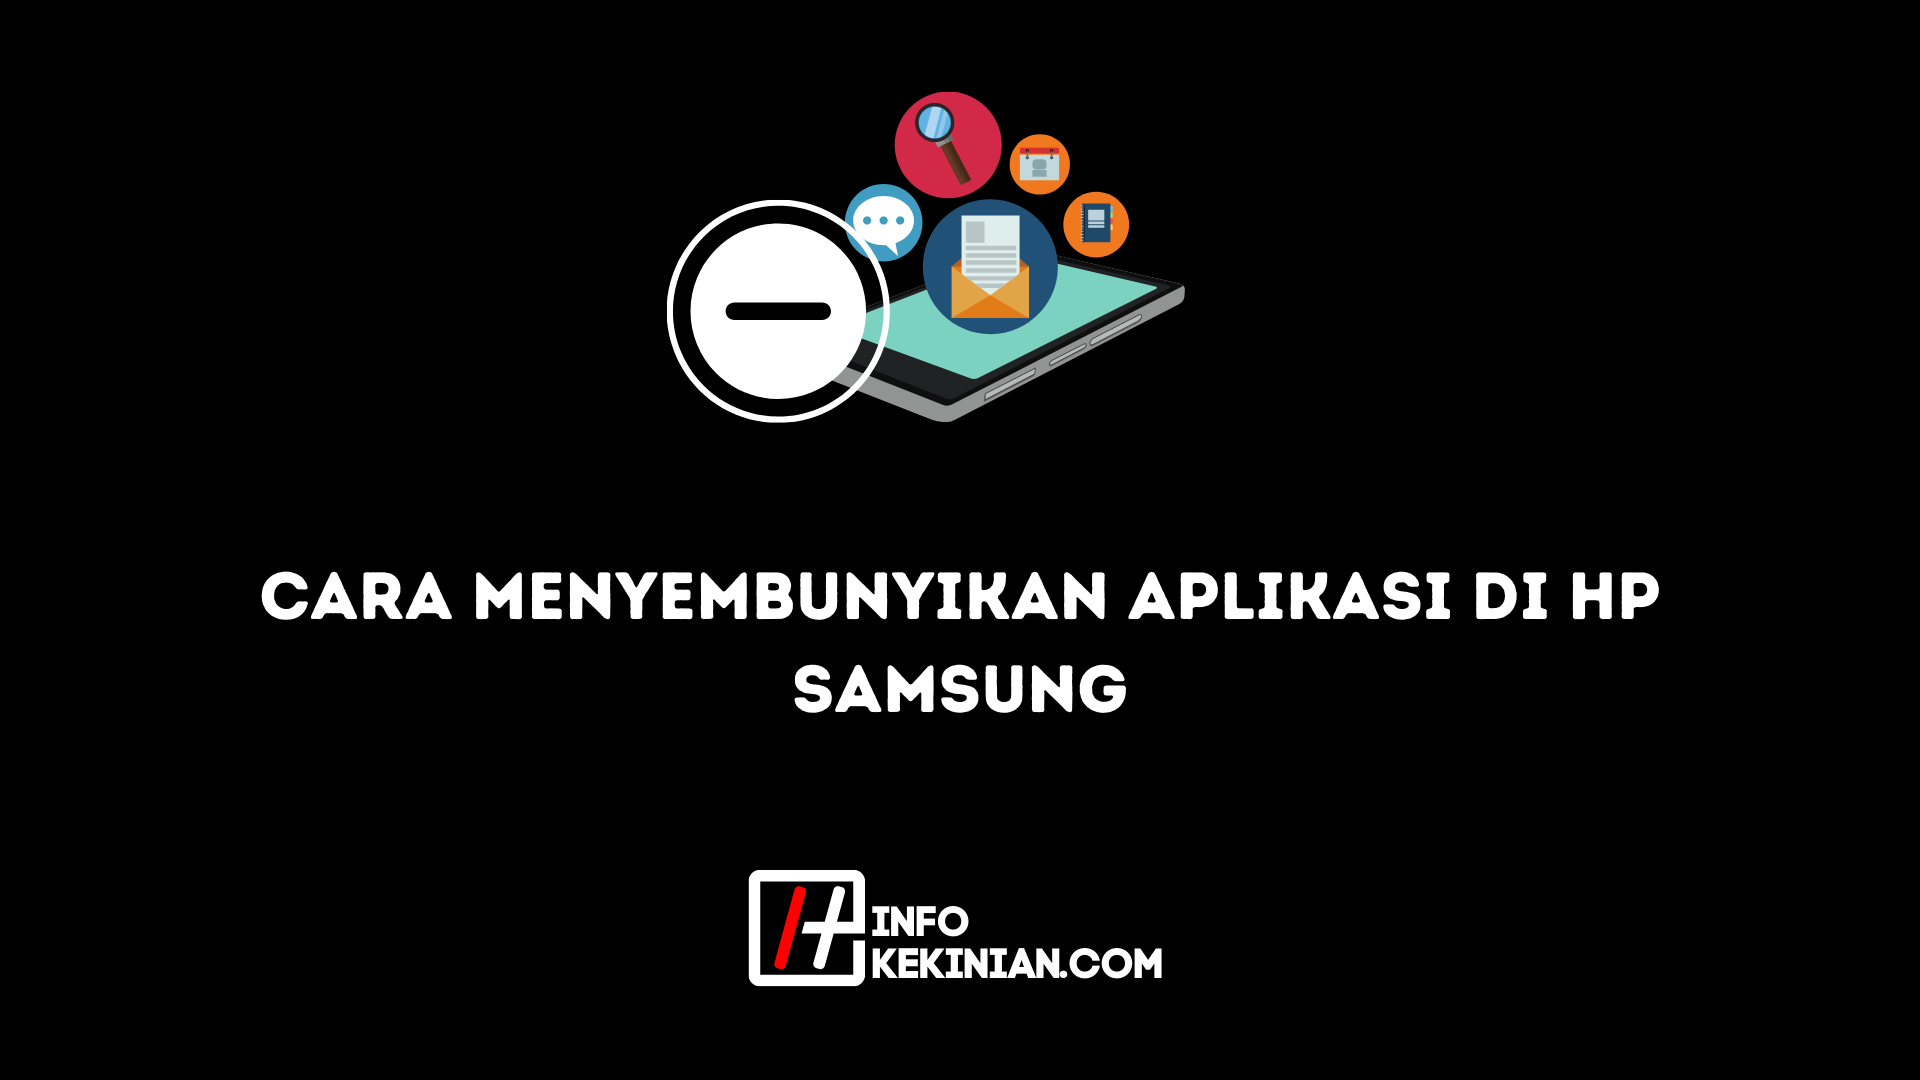 Jak ukryć aplikacje na telefonach Samsung